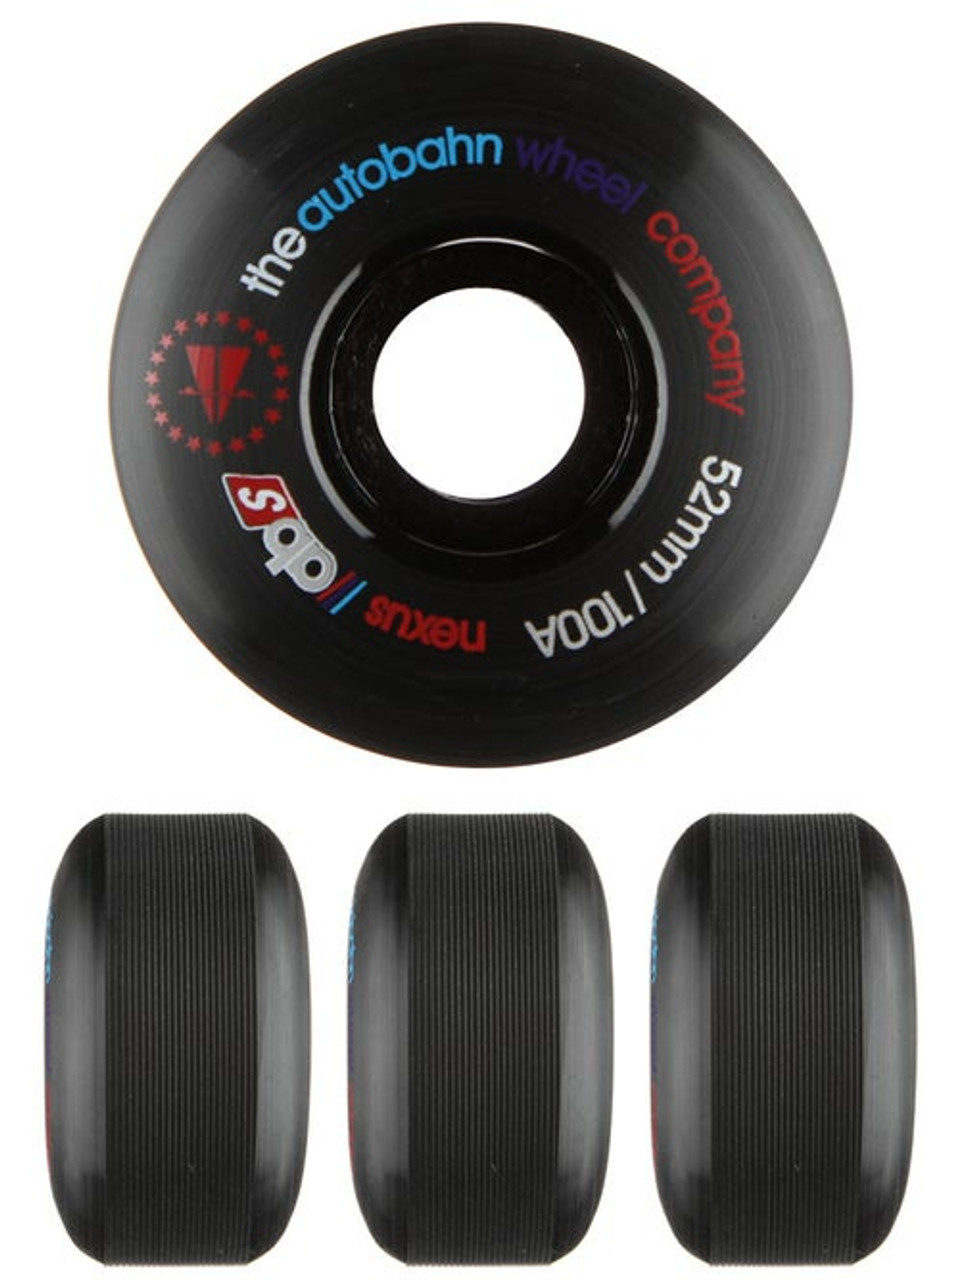 AutoBahn Nexus Skate Wheels Set Black 52mm/100a